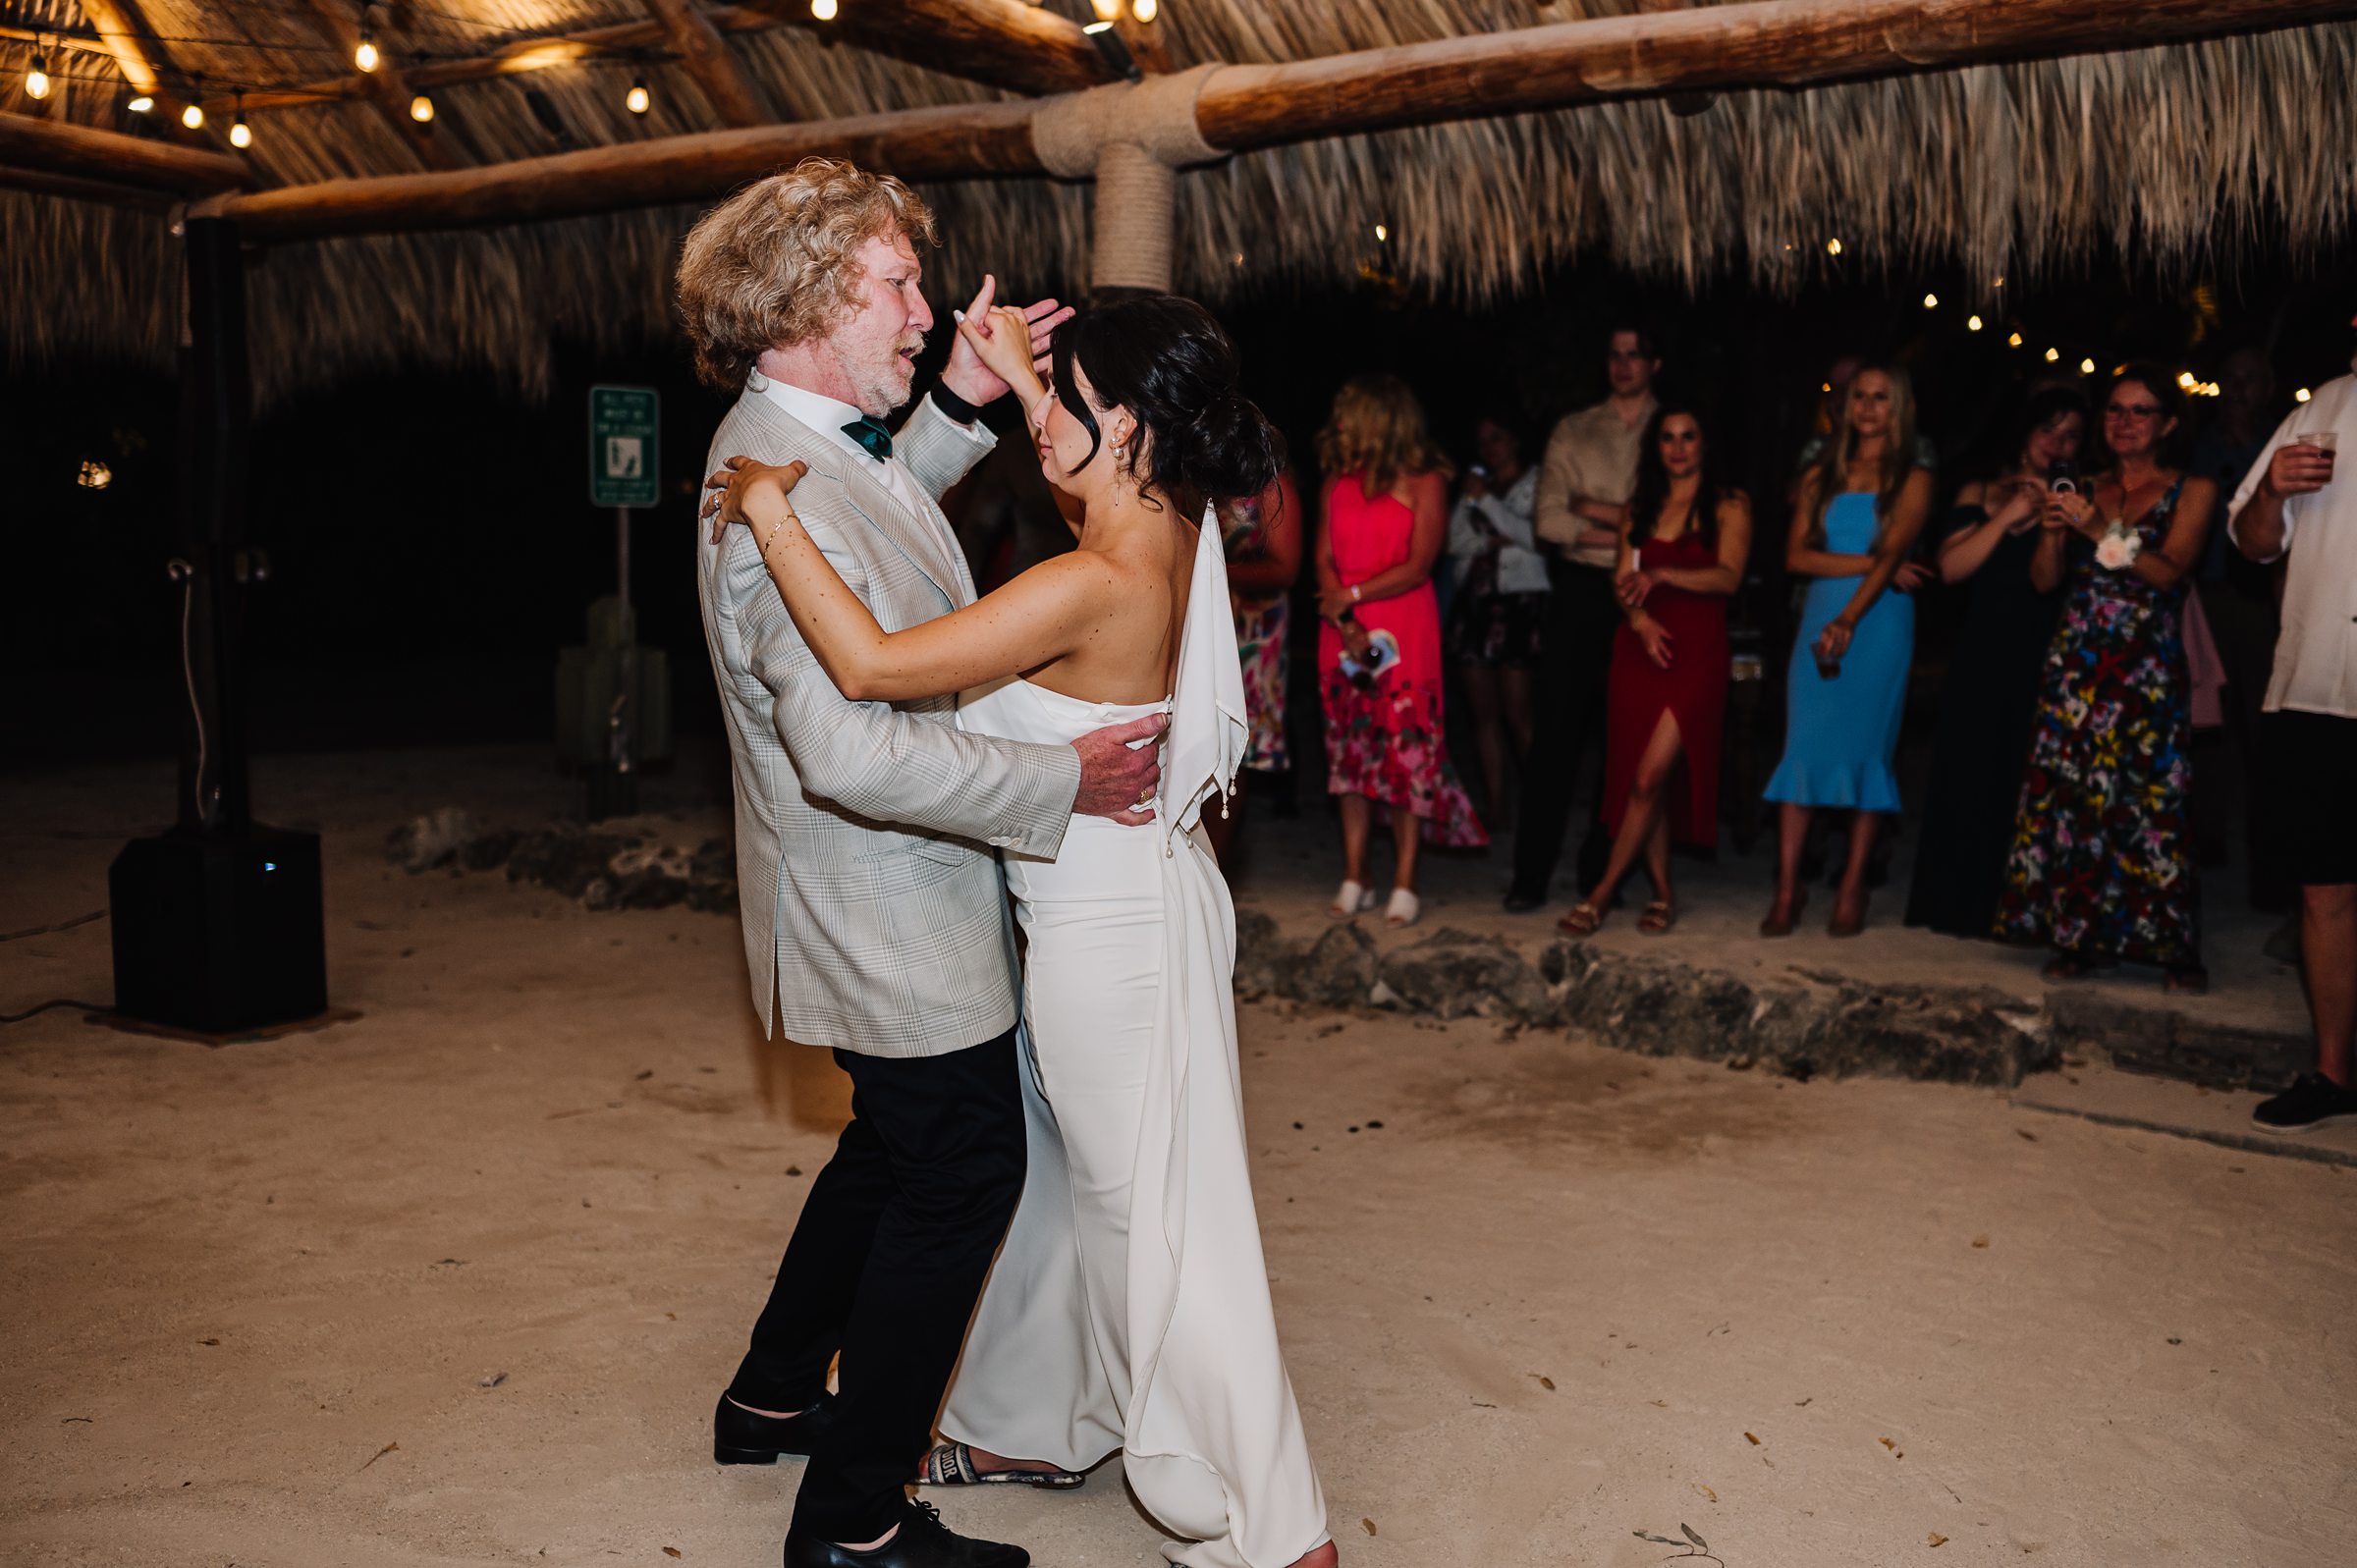 Intimate first dance under the stars at a Key Largo destination wedding.